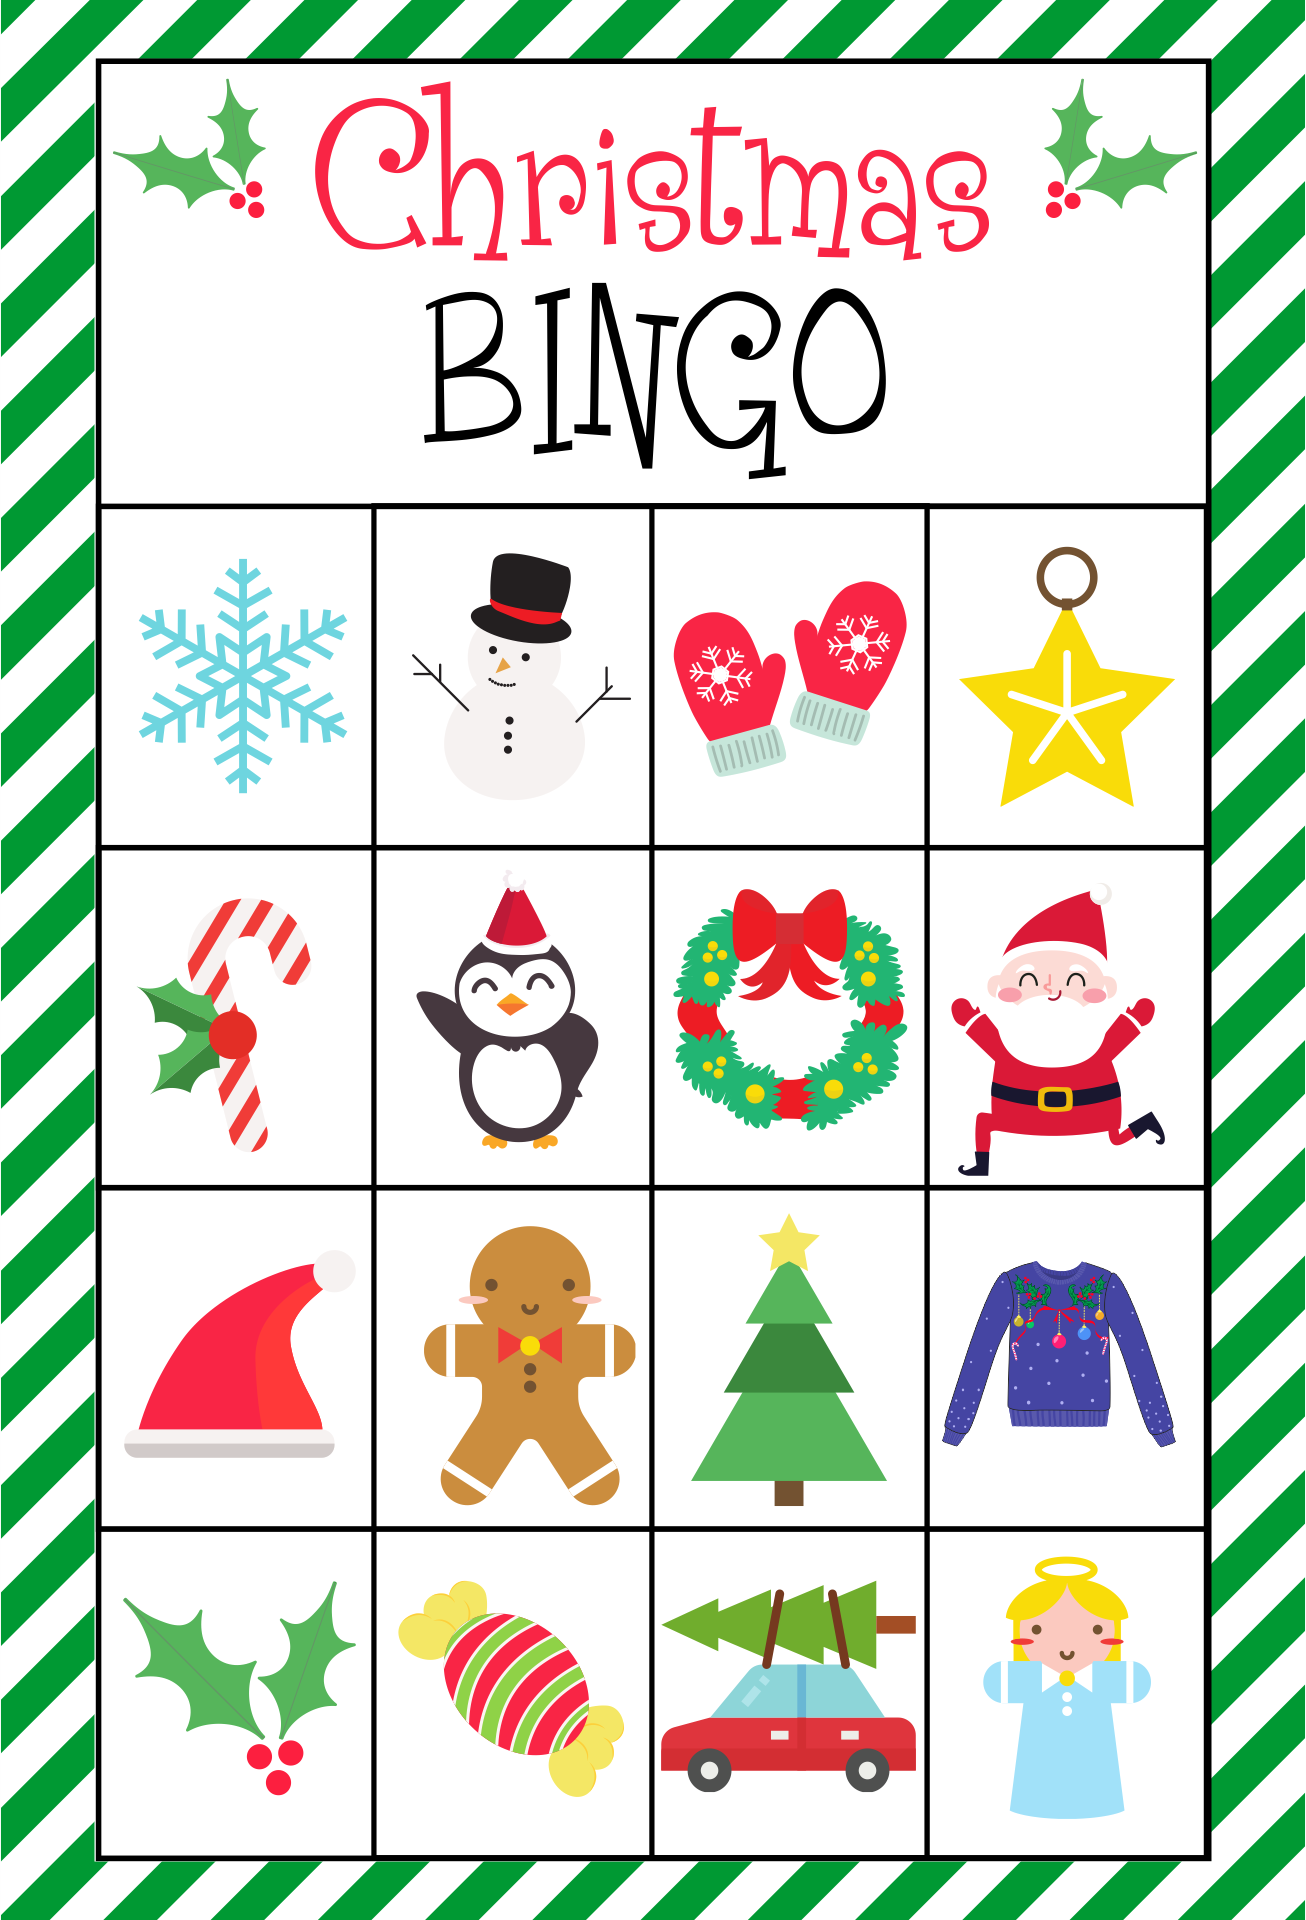 These Christmas Bingo Cards